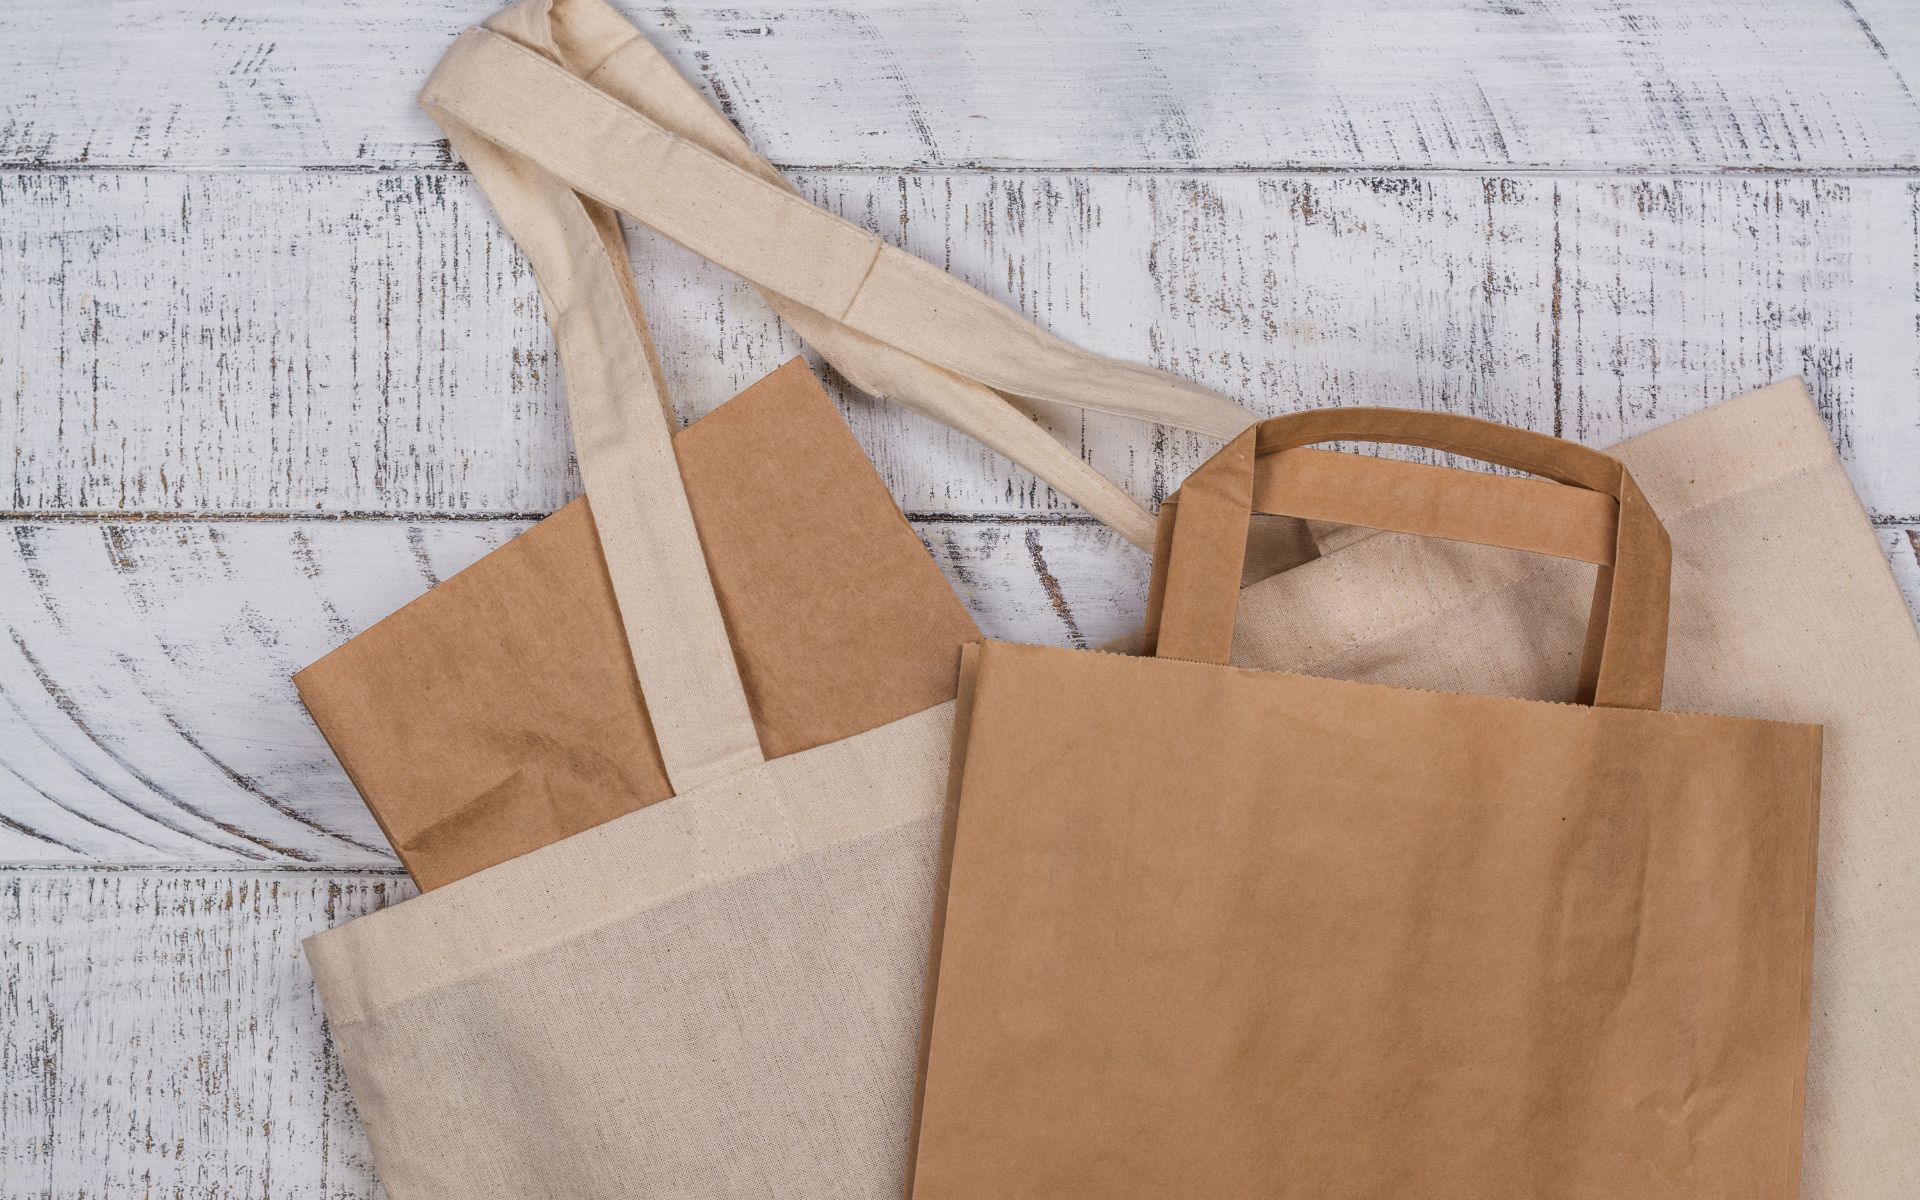 Bring Your Reusable Bags When Shopping